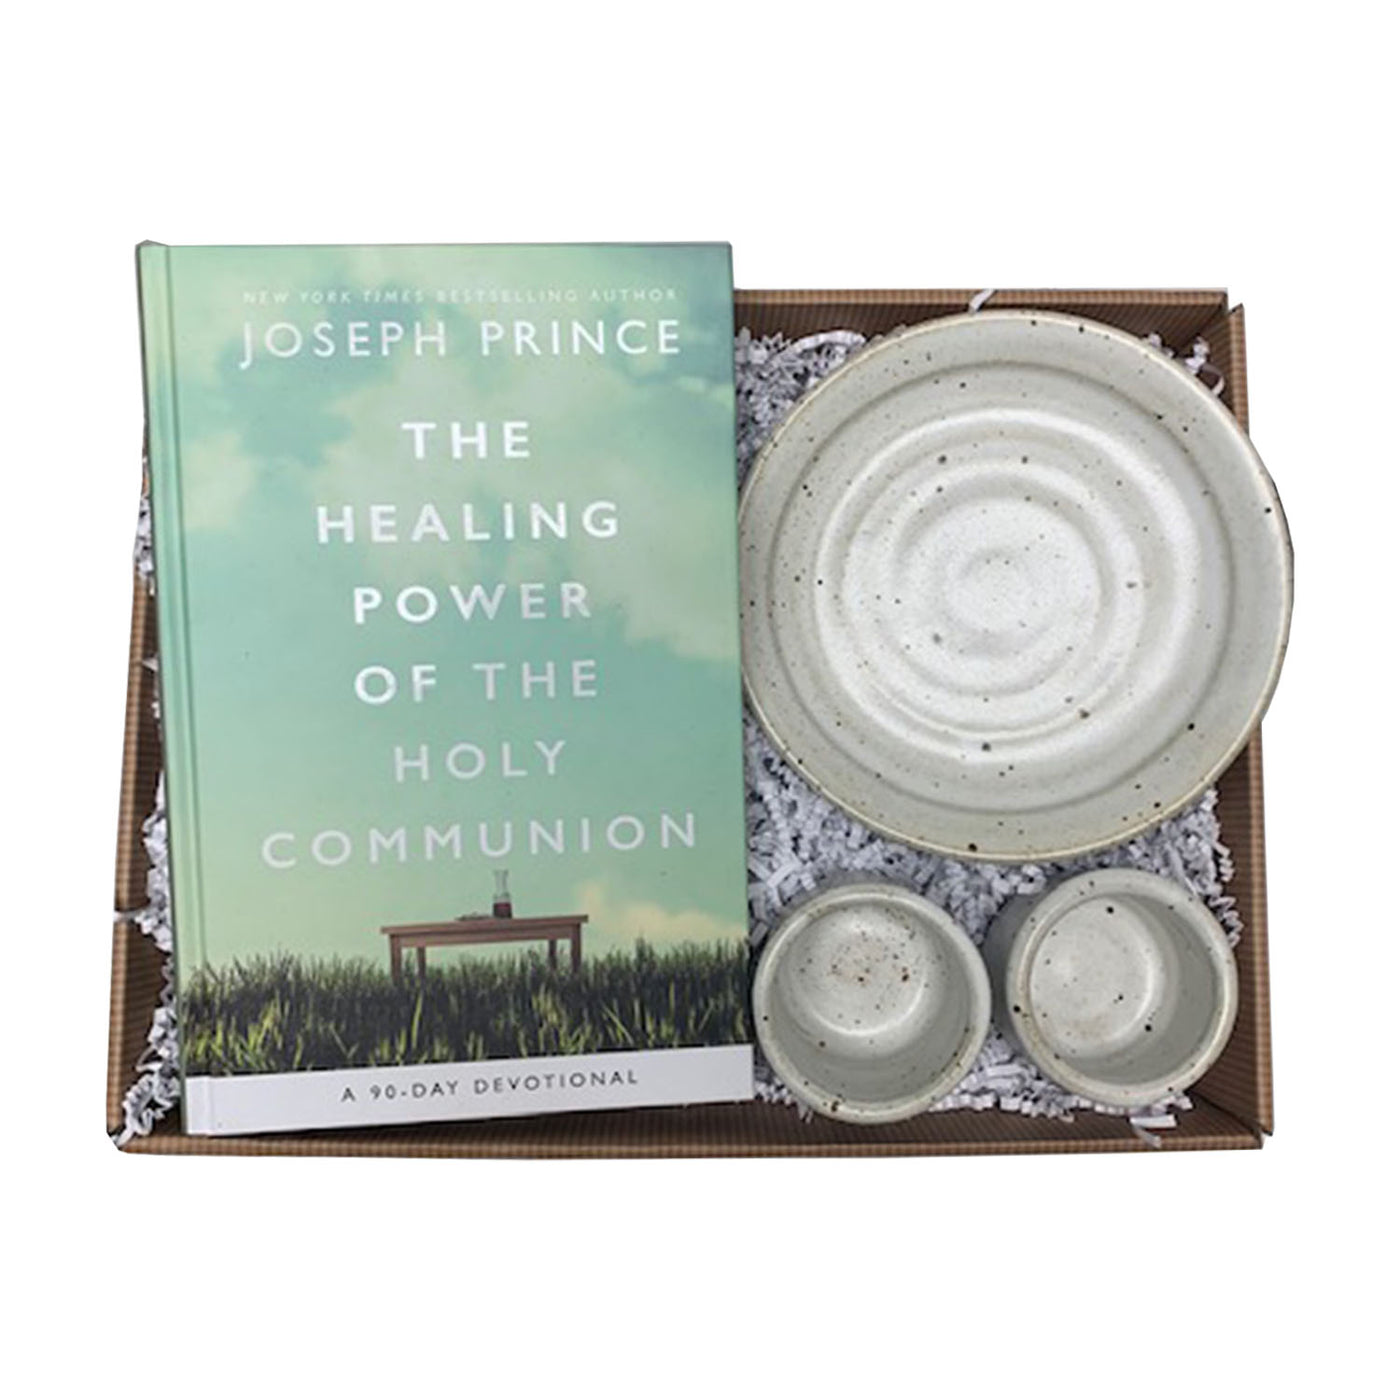 Communion - Communion Set with Book